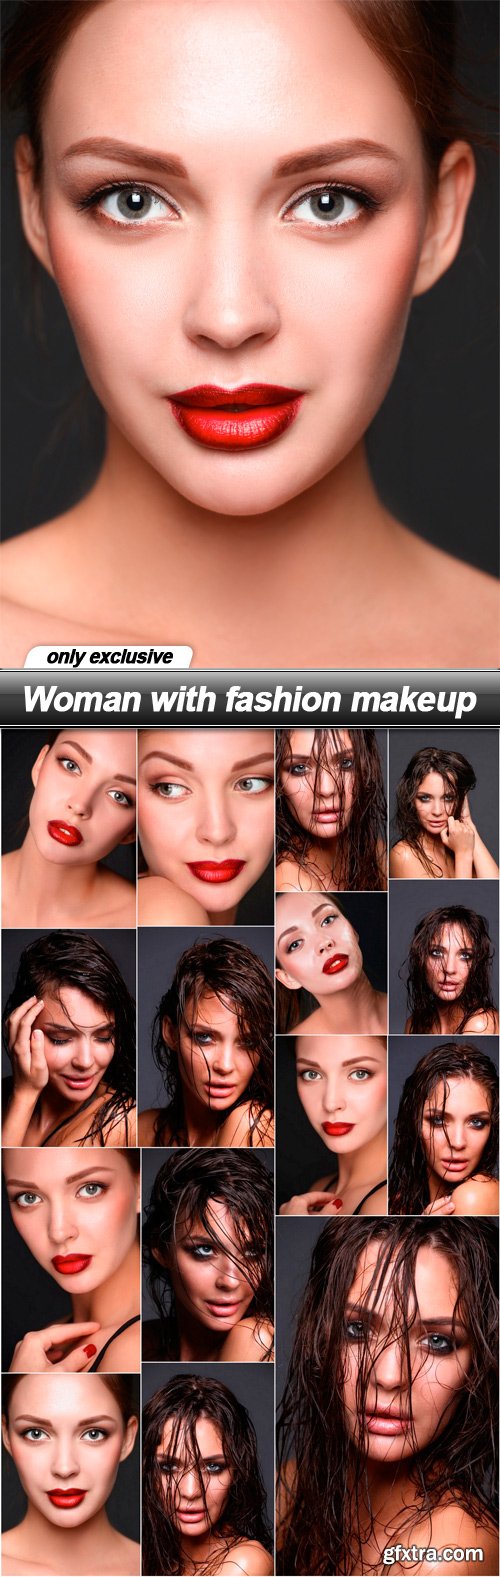 Woman with fashion makeup - 15 UHQ JPEG